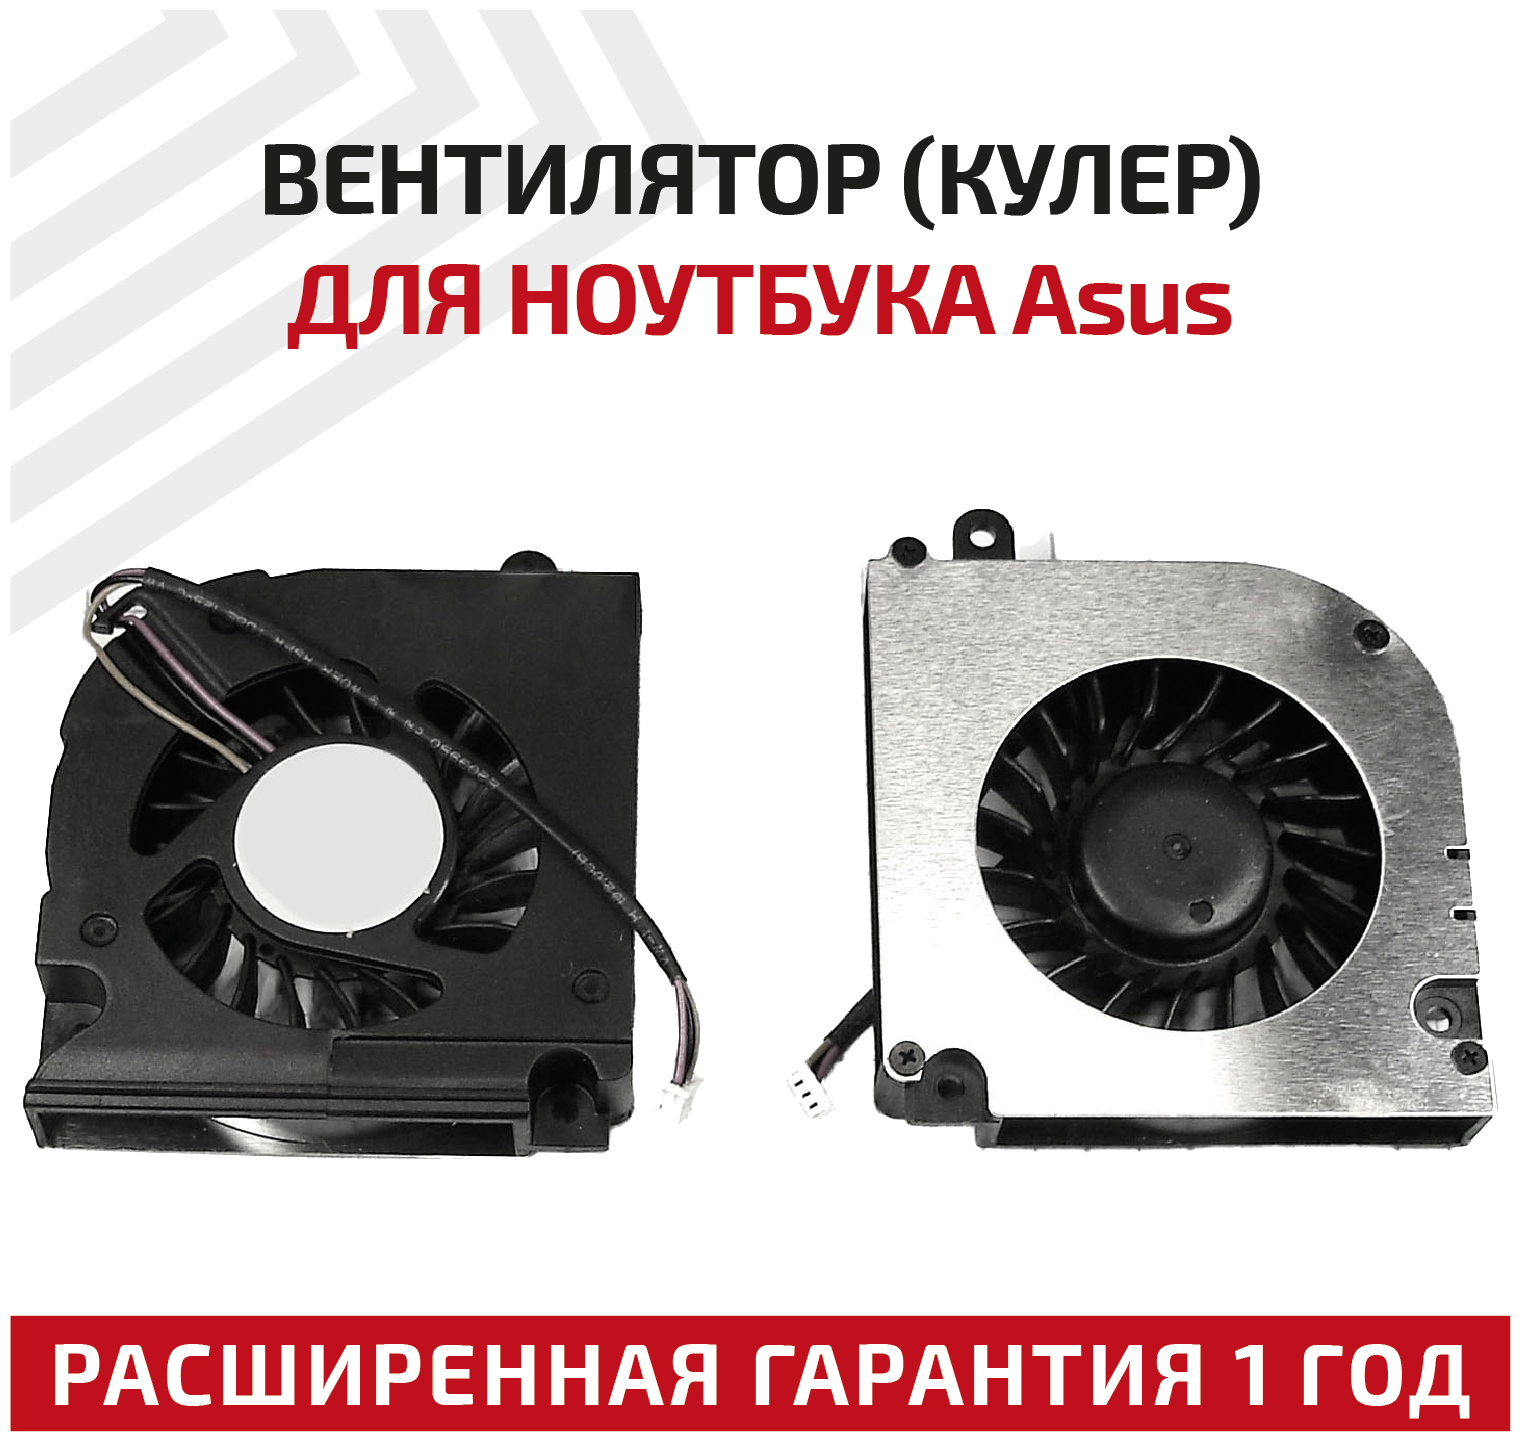 Вентилятор (кулер) для ноутбука Acer Aspire 3020 3040 5020 5040 Fujitsu Siemens Amilo Li1718 Li1720 Li1718 Li2735 Pro V3505